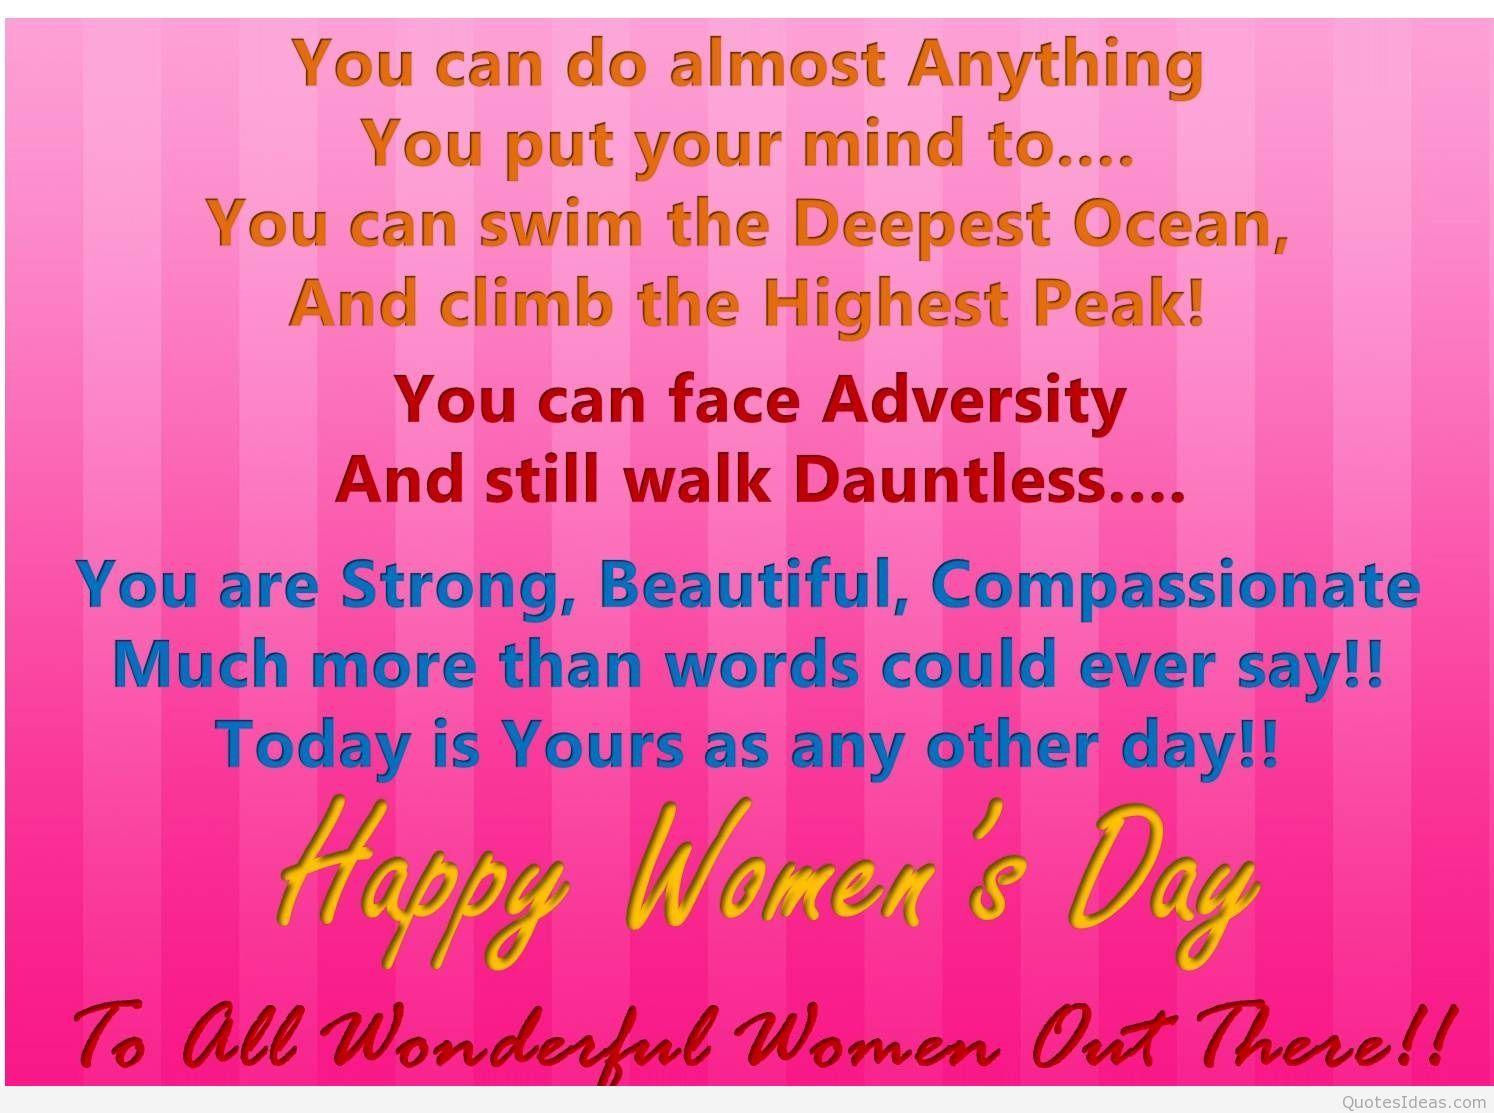 Happy women's day wallpaper quotes 2016